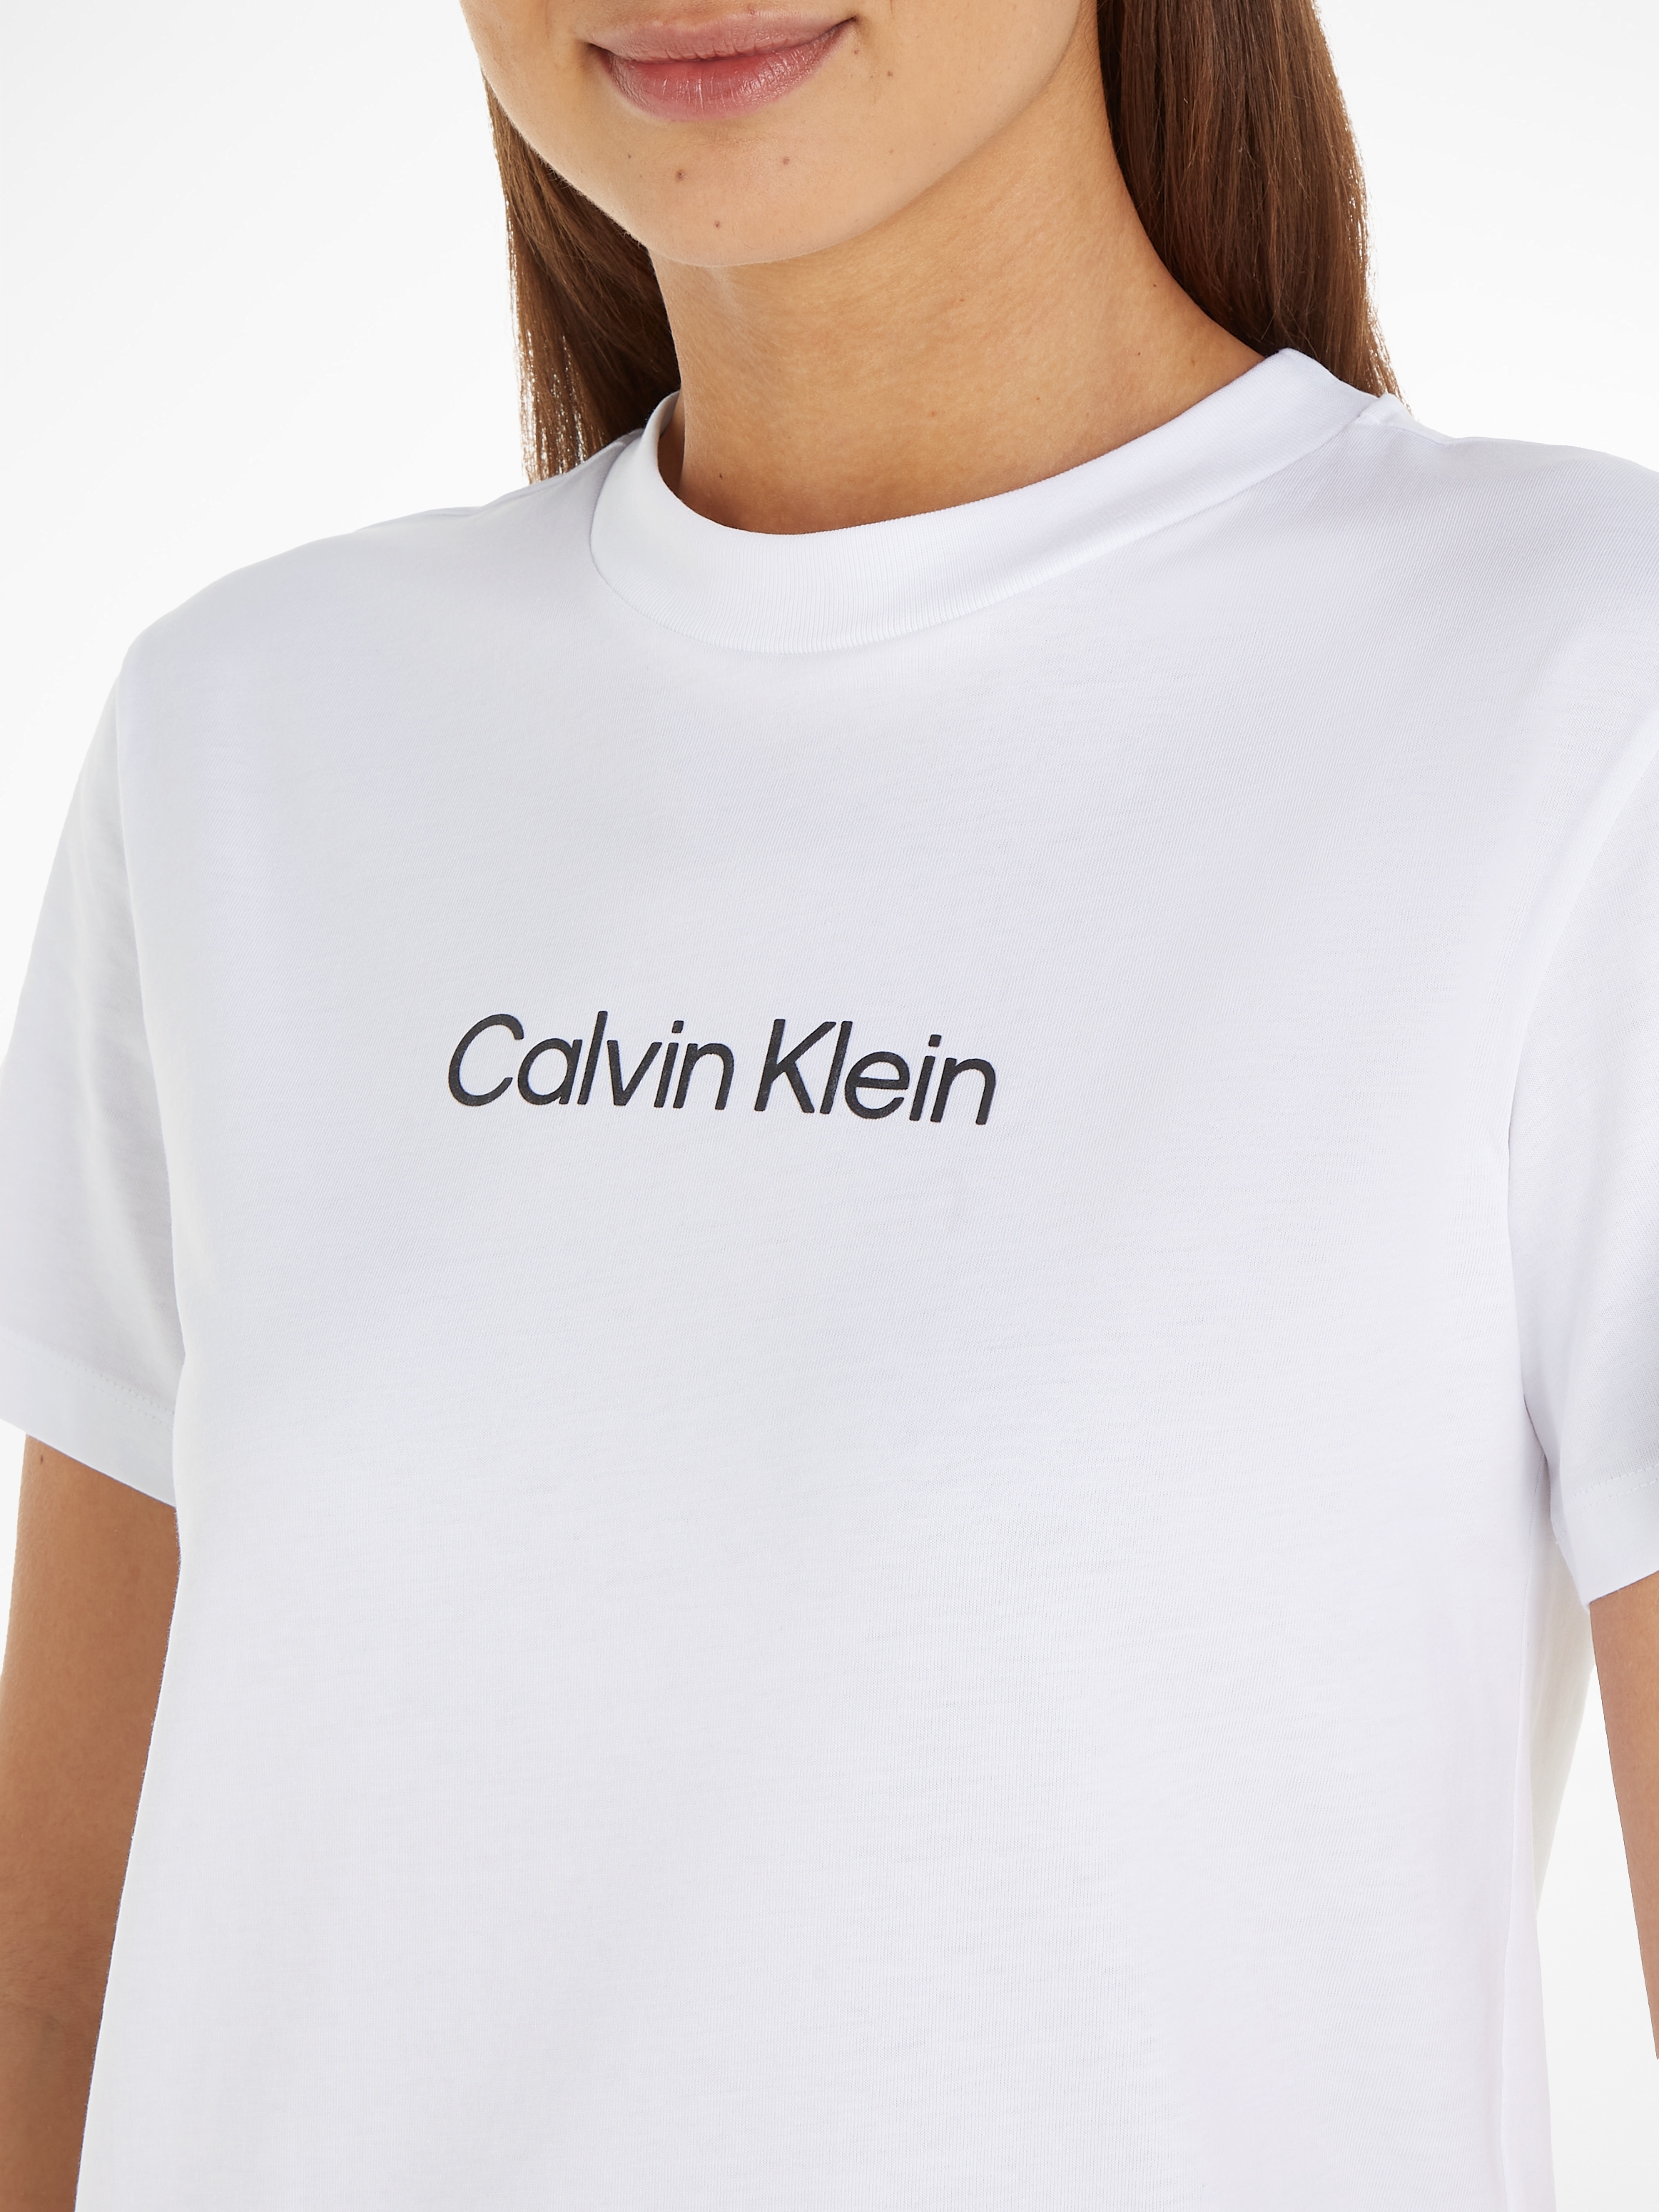 REGULAR« shoppen LOGO »Shirt Calvin walking I\'m Klein T-Shirt HERO |